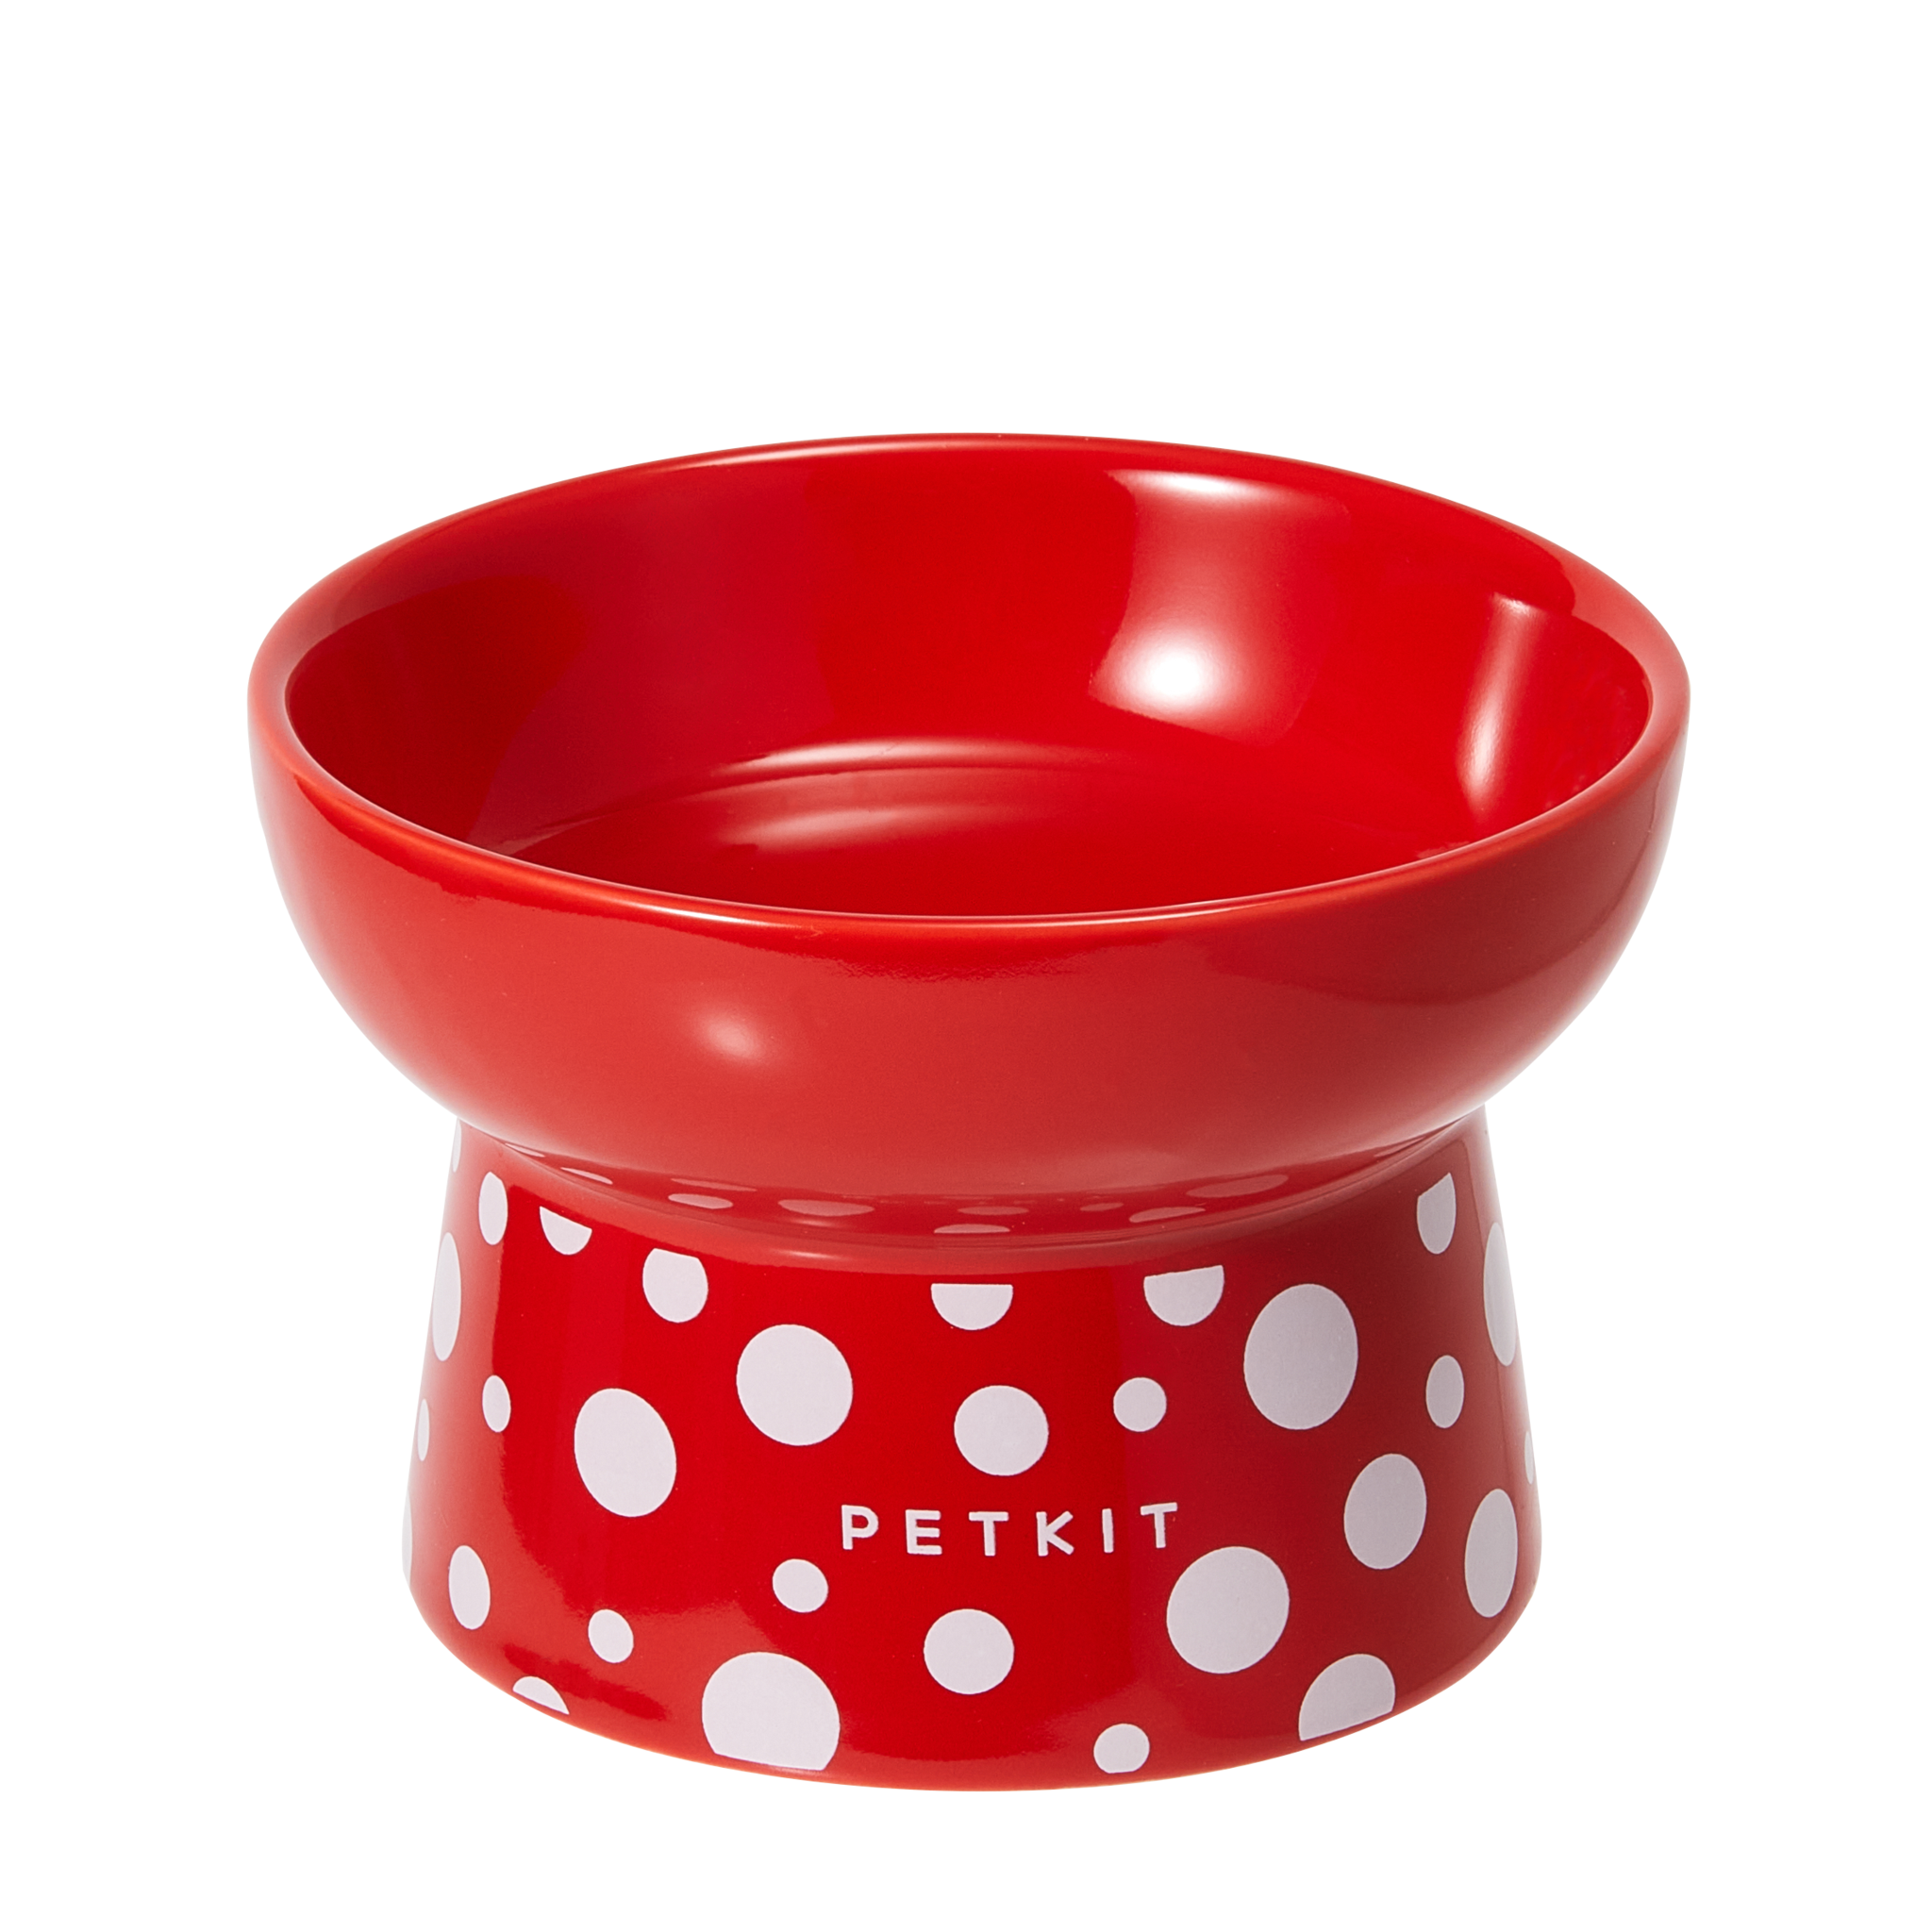 PETKIT Ceraspot Ceramic Pet Feeding Bowl 2 Colour